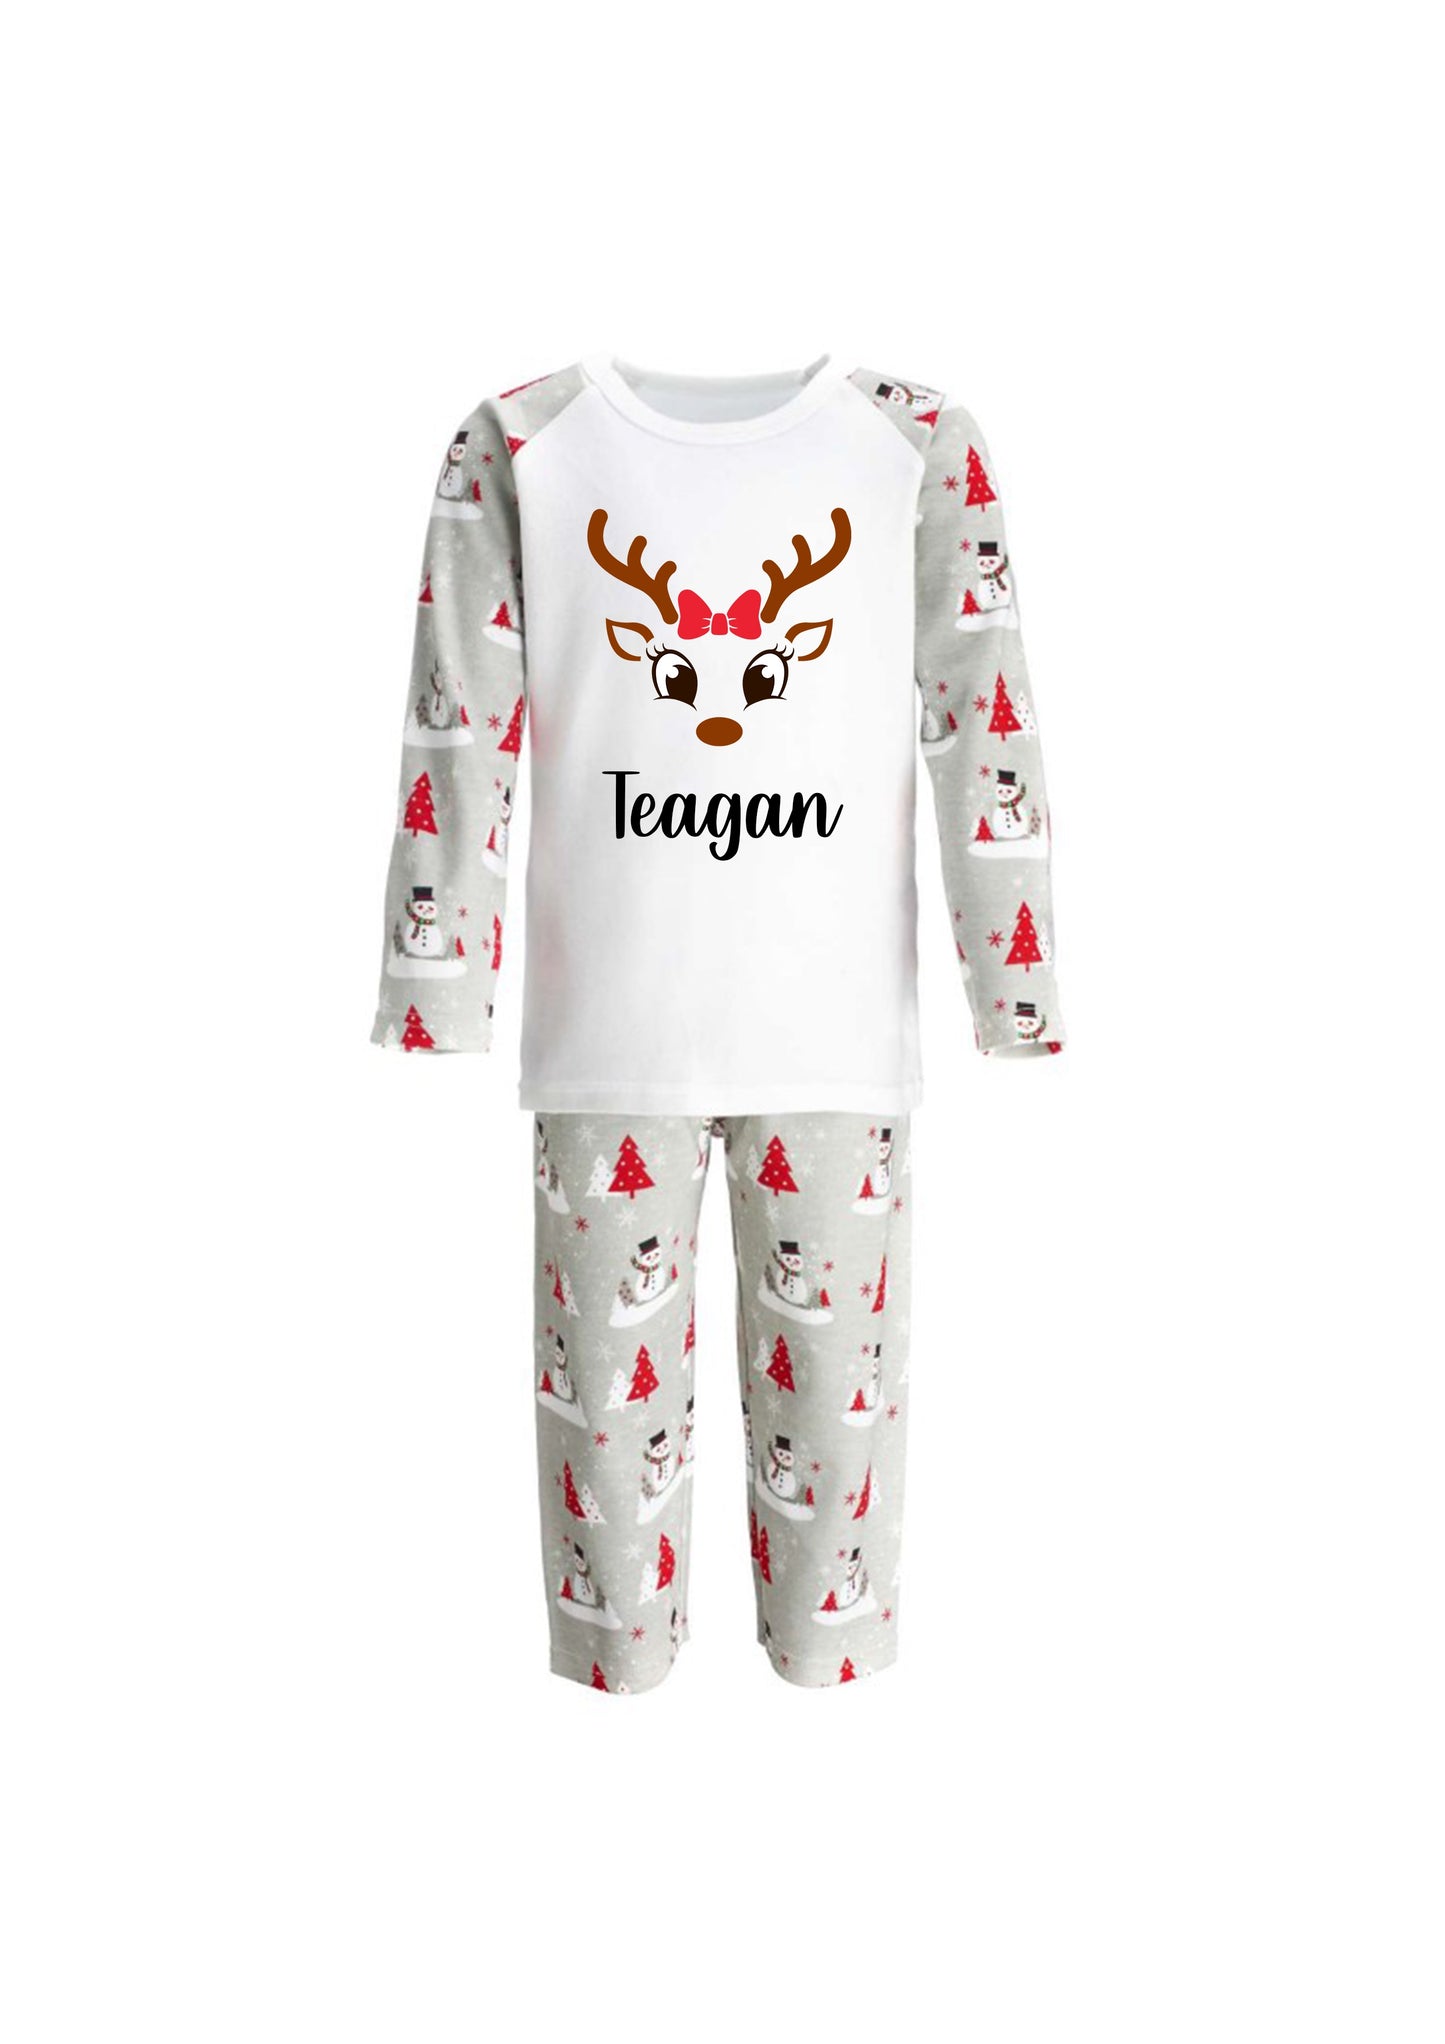 Snowman Pyjamas - Reindeer Design (Boy & Girl Design)